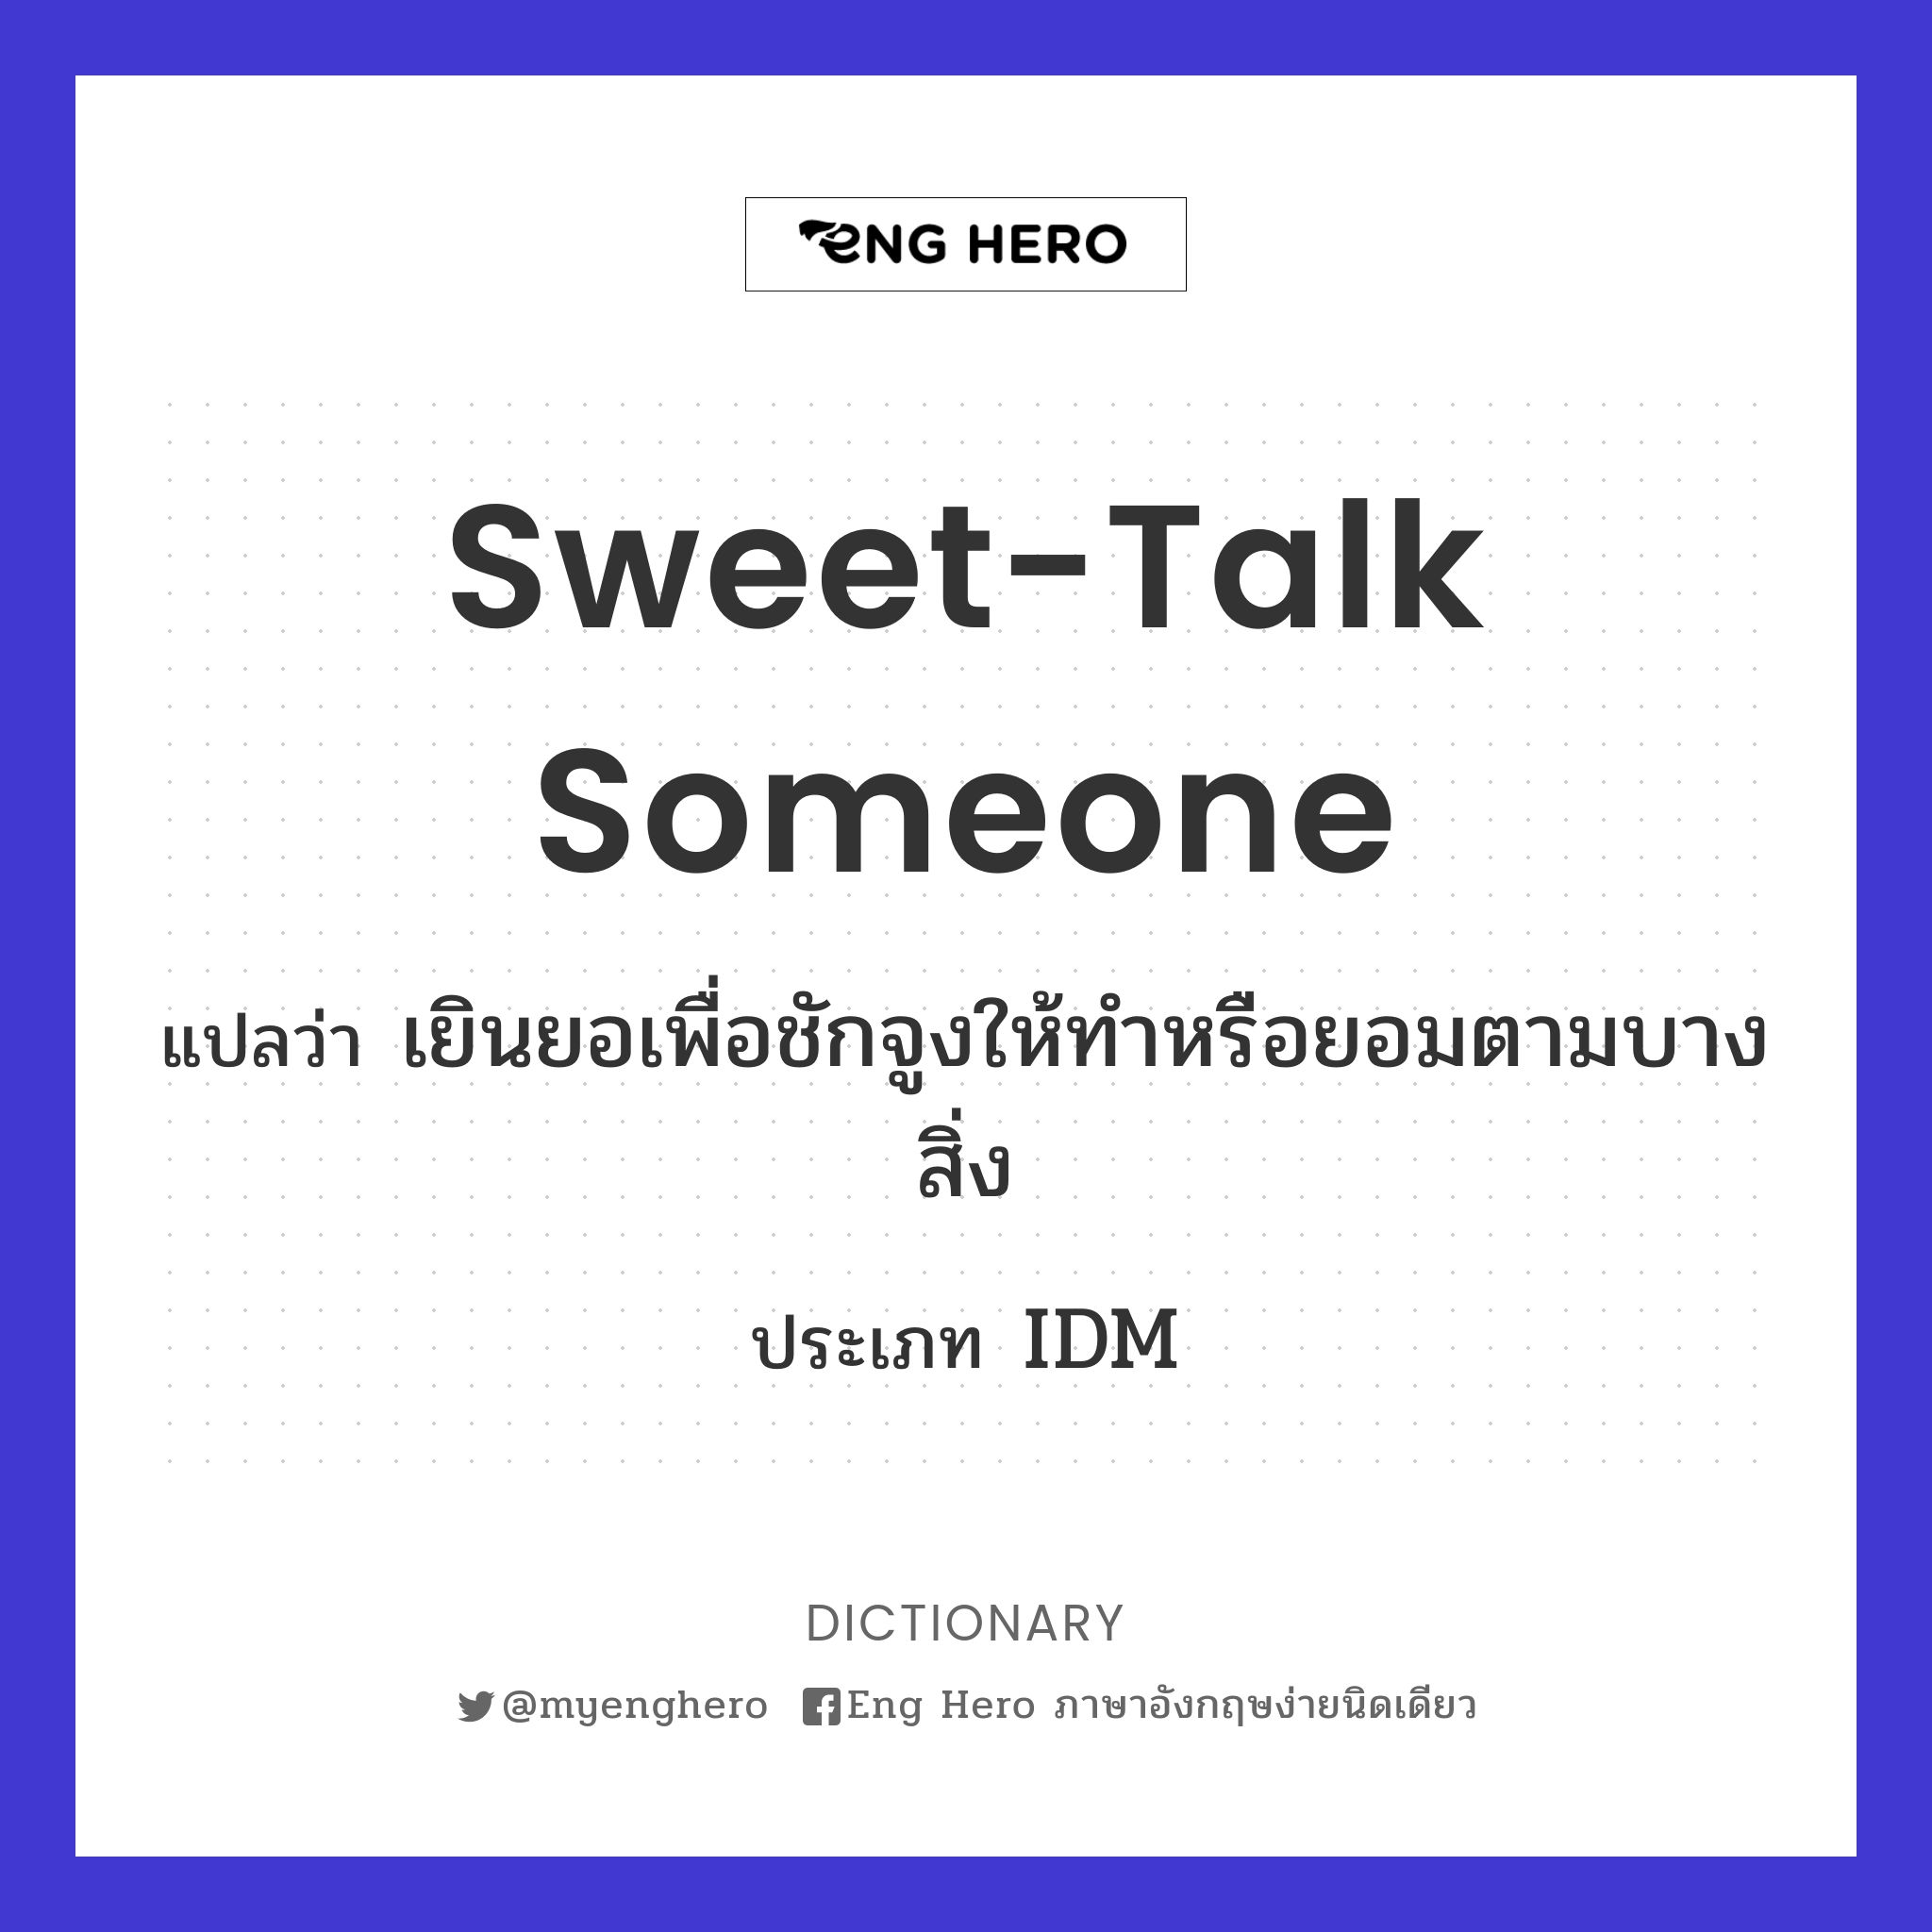 sweet-talk someone